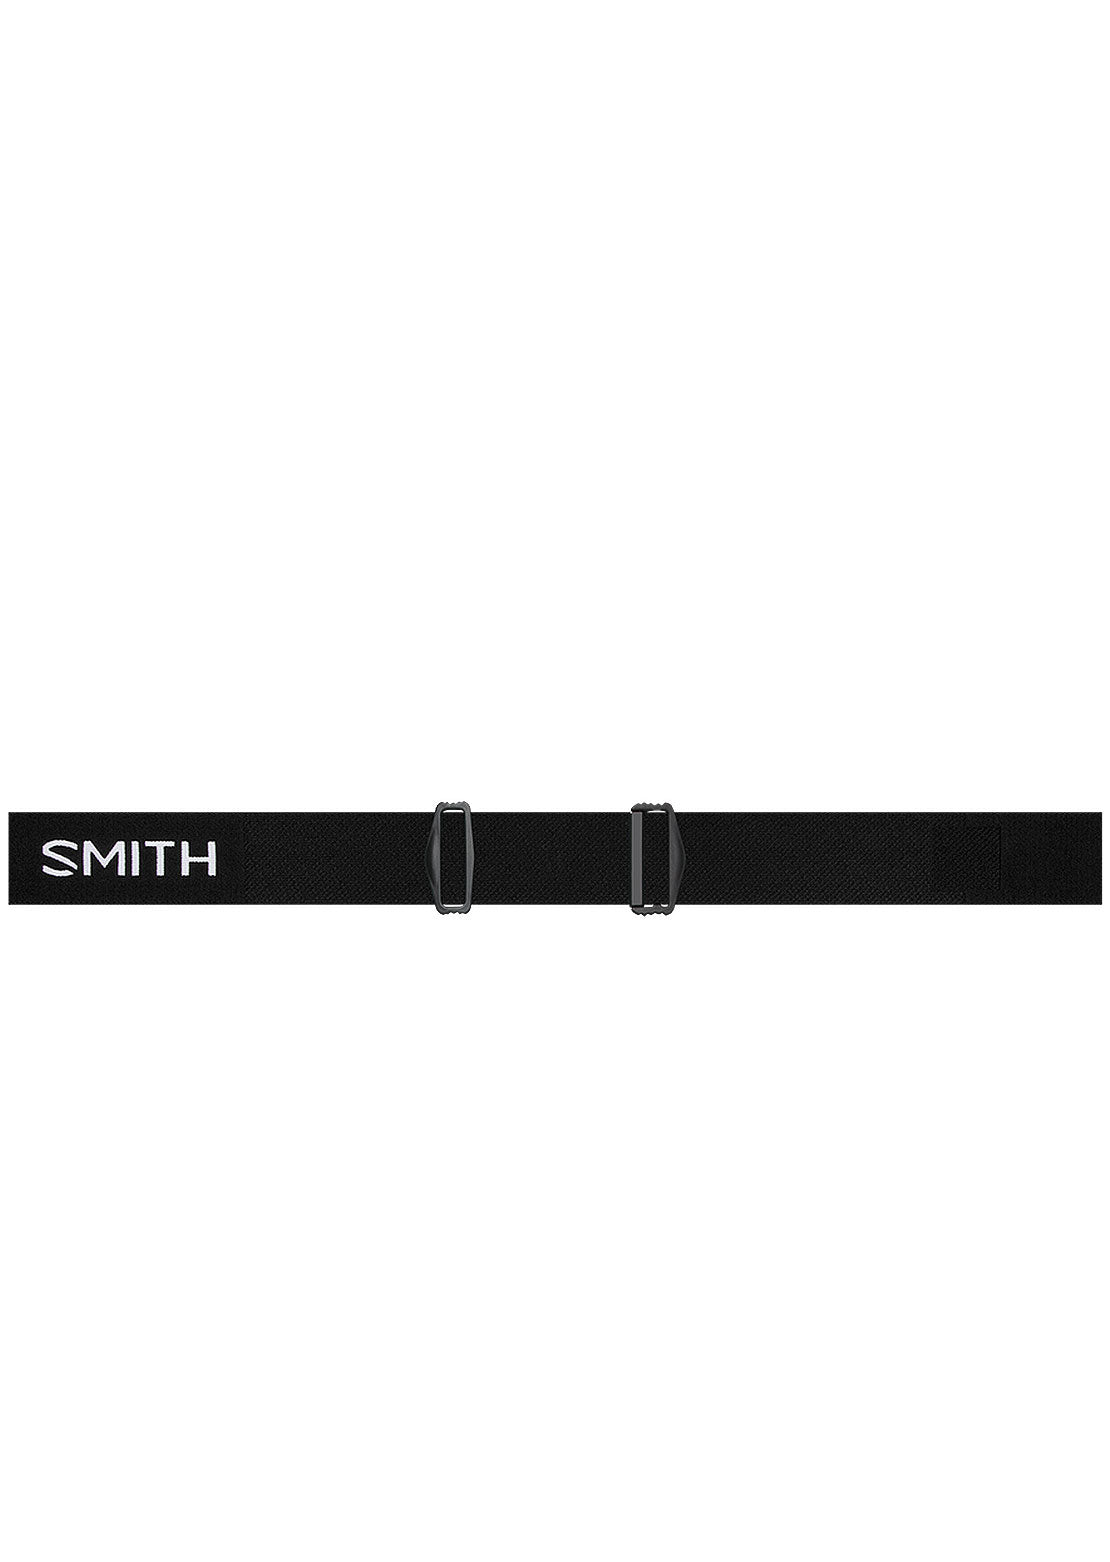 Smith Skyline XL Goggles Black/ChromaPop Everyday Green Mirror